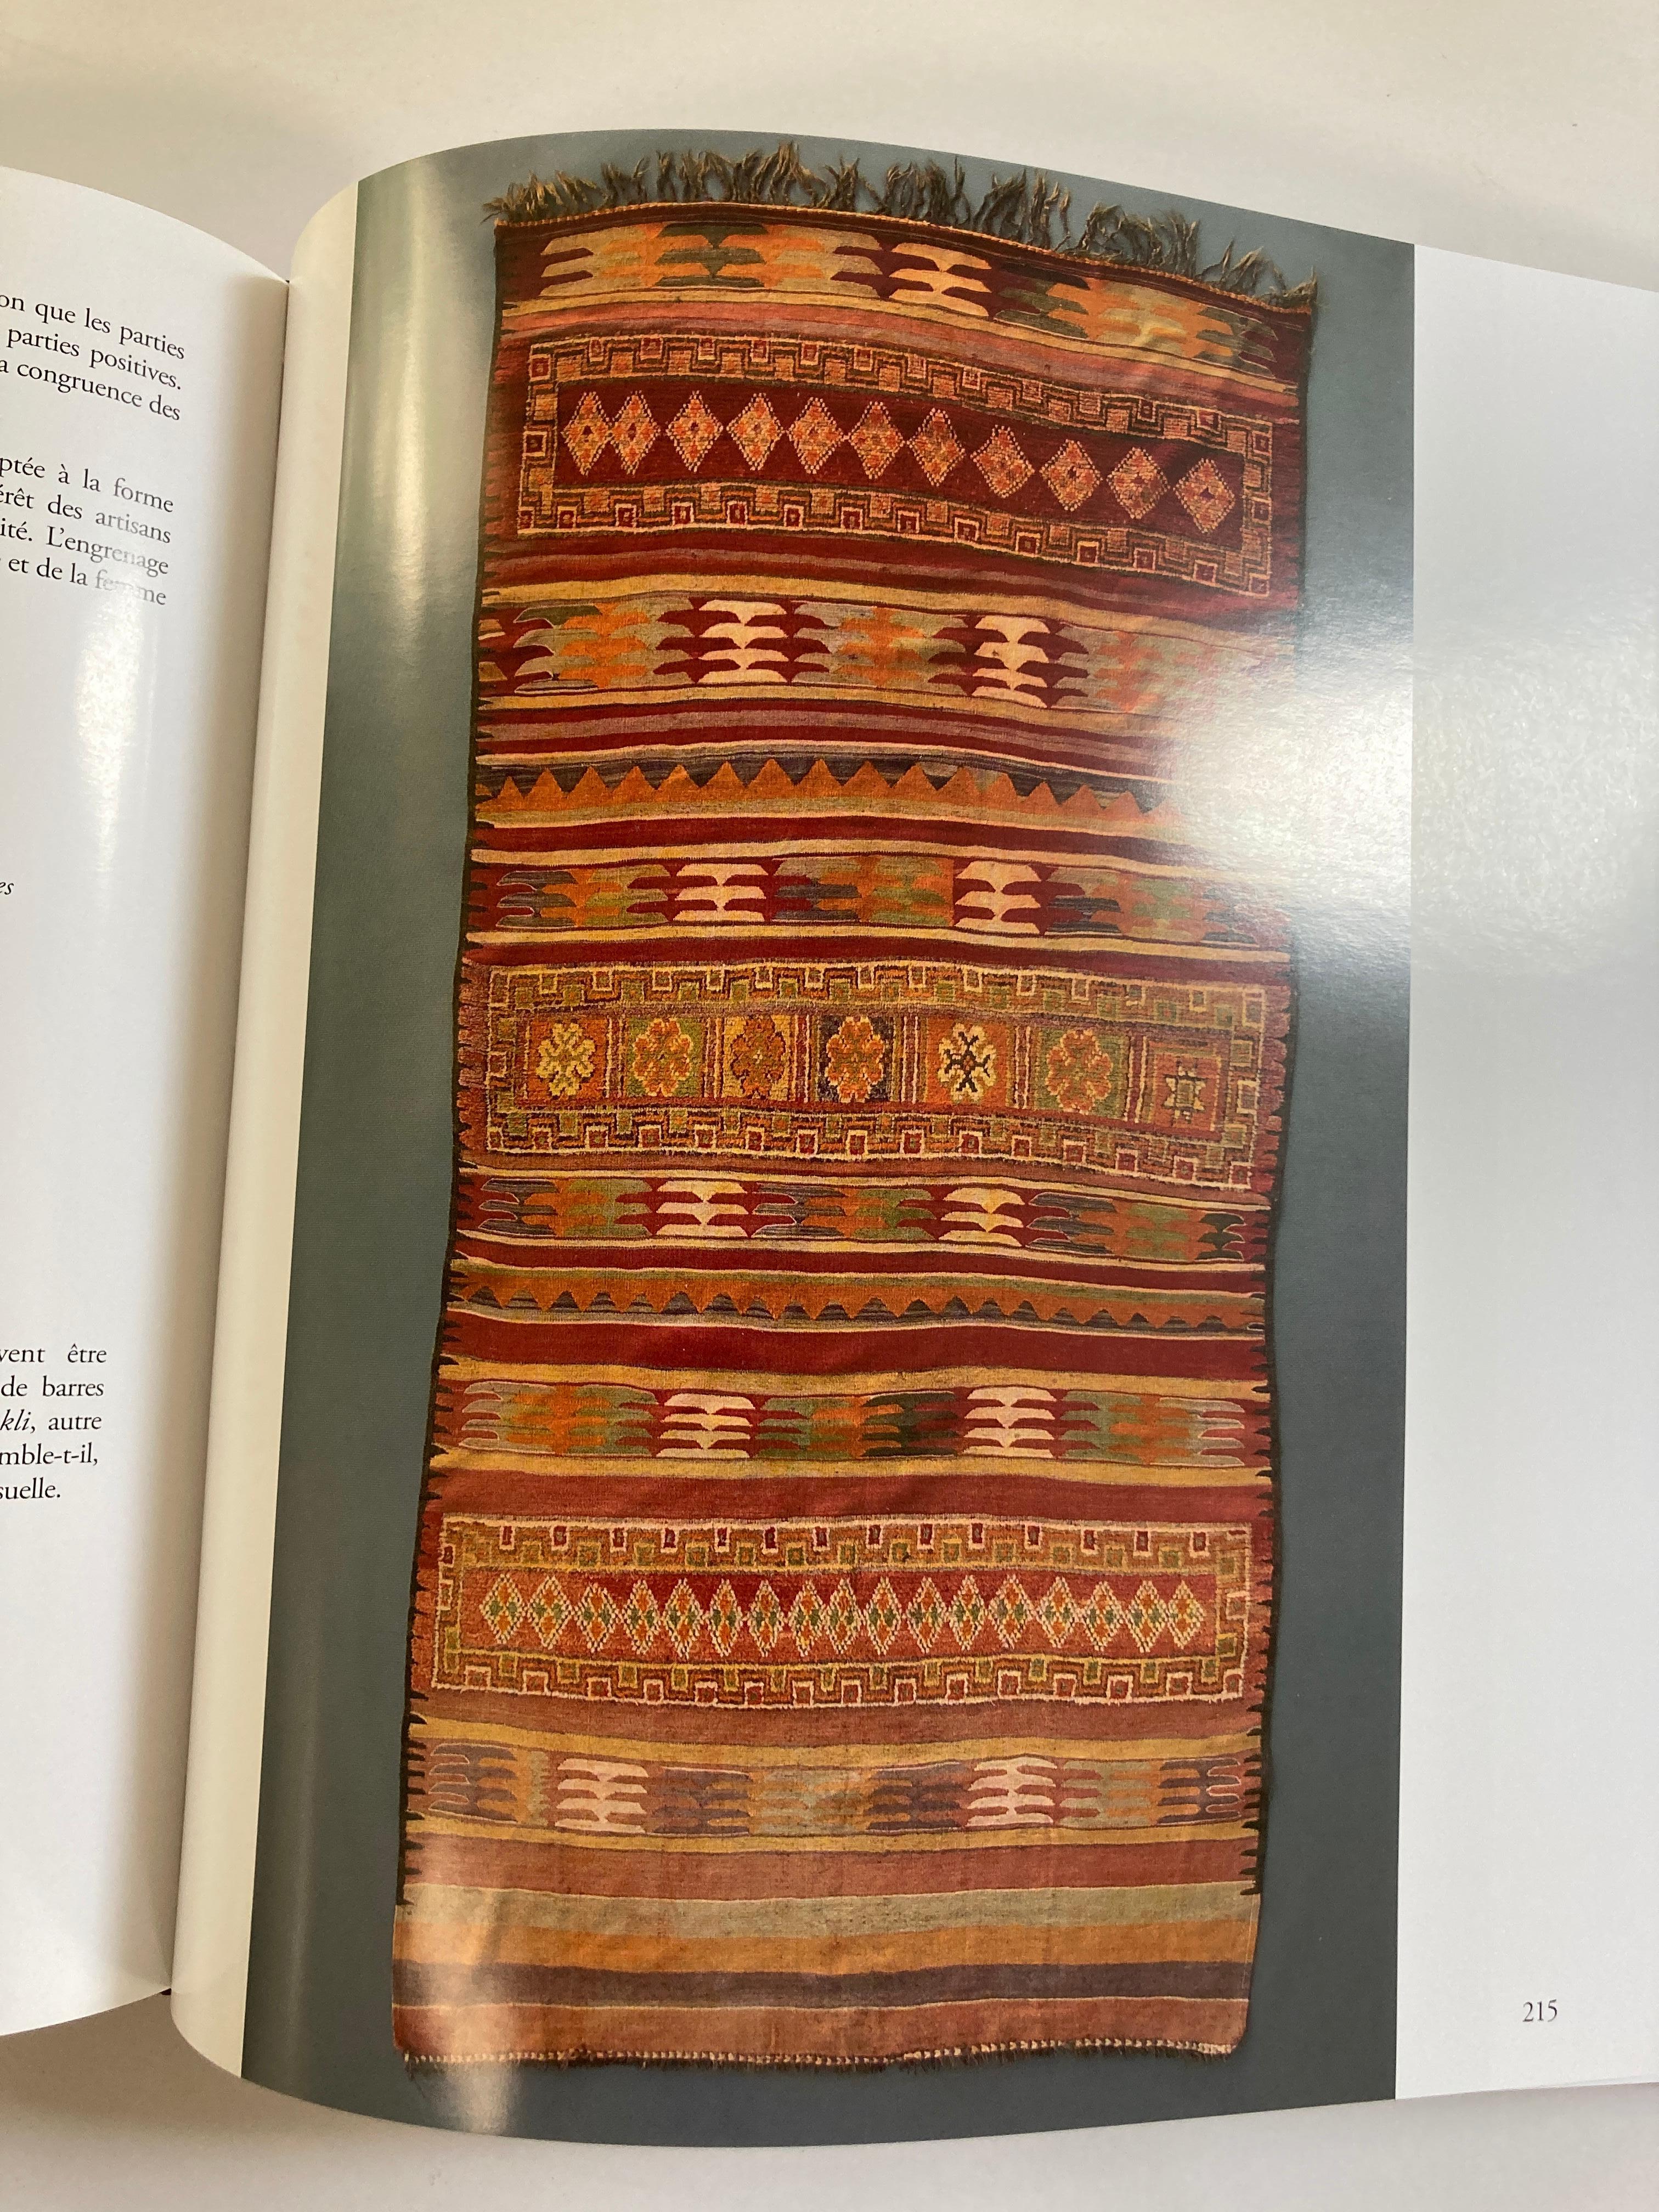 Tapis Berberes du Maroc, Berber Carpets from Morocco Table Book 6